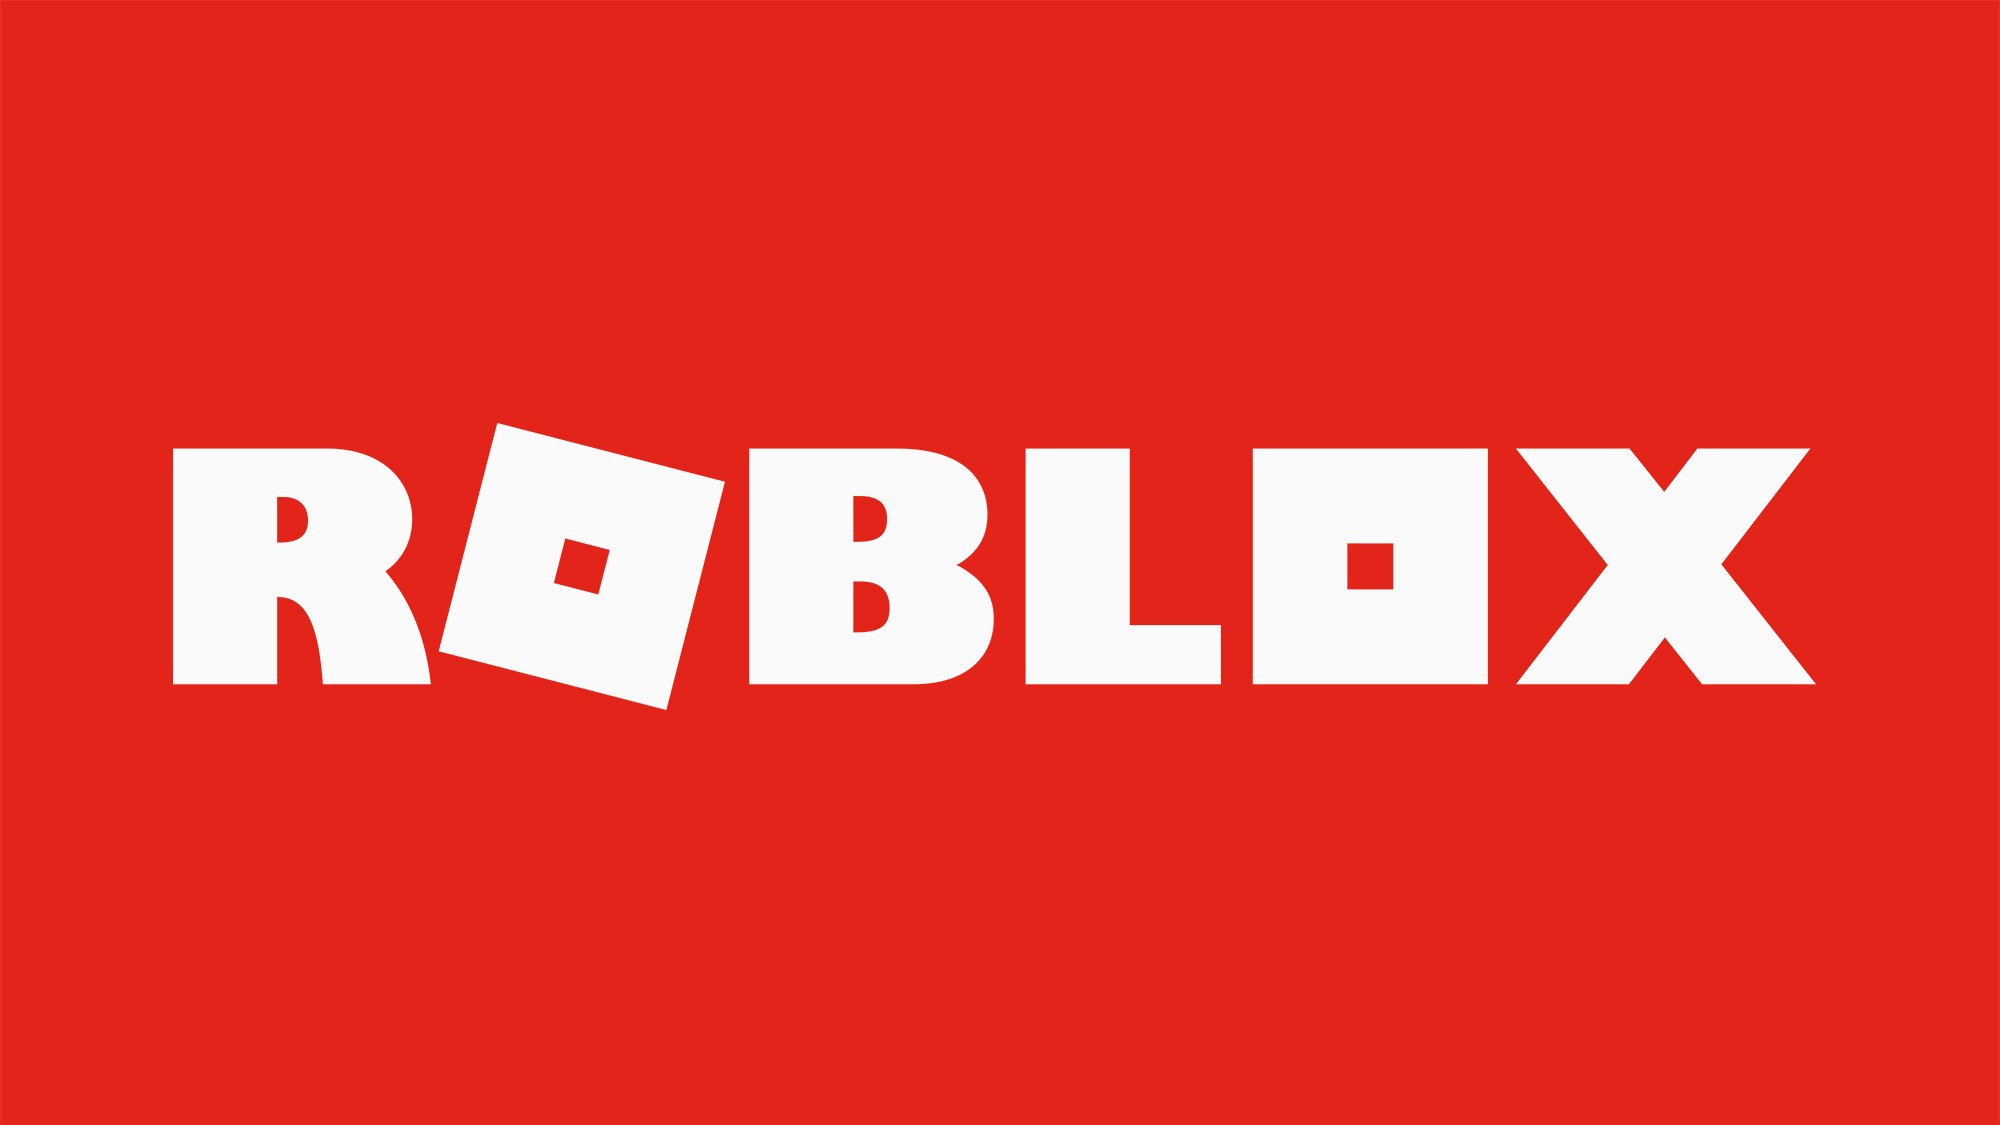 Roblox Logo Redesign (Community)